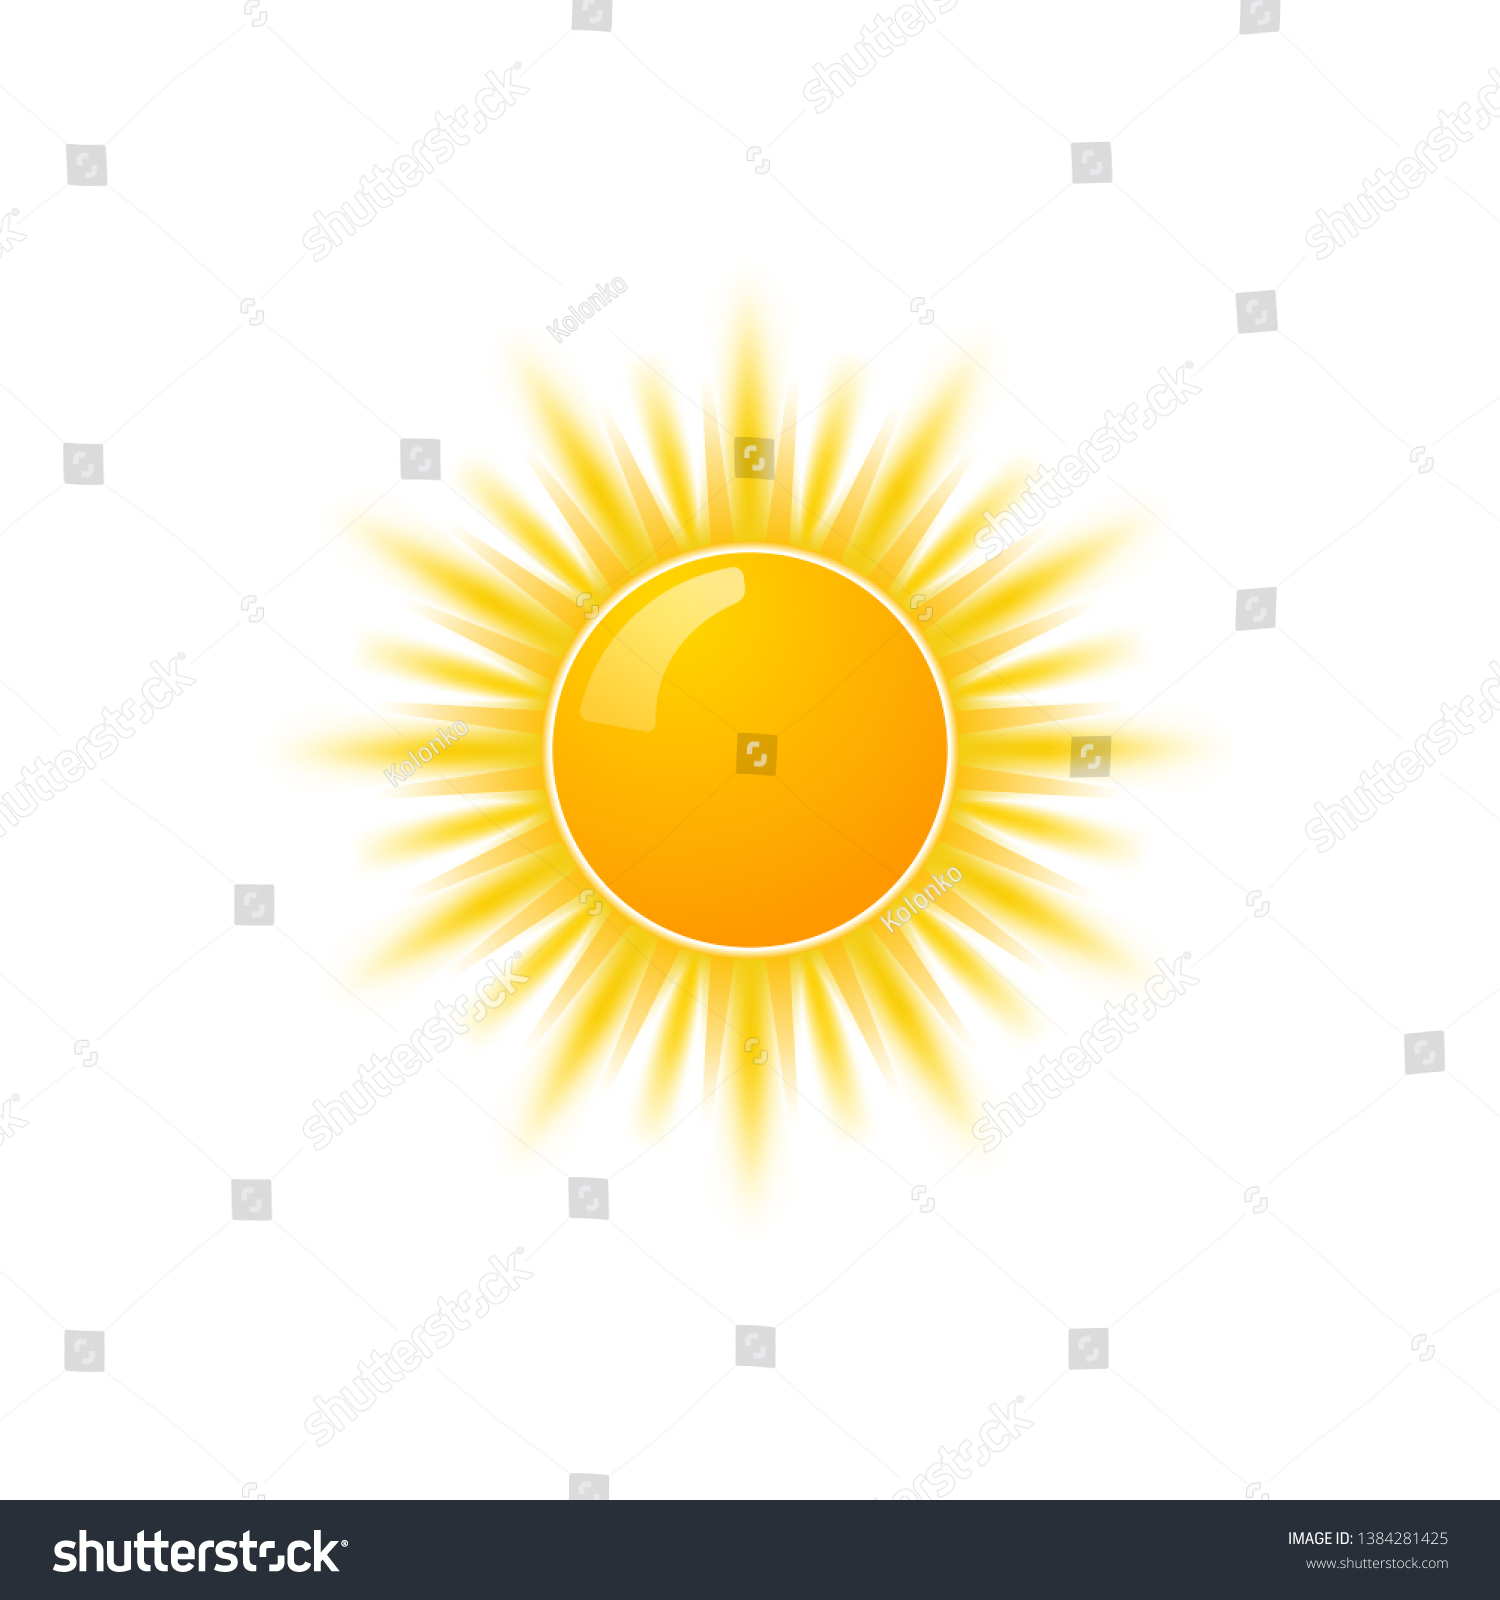 Realistic sun icon for weather design. Sunshine symbol happy orange isolated sun illustration. #1384281425